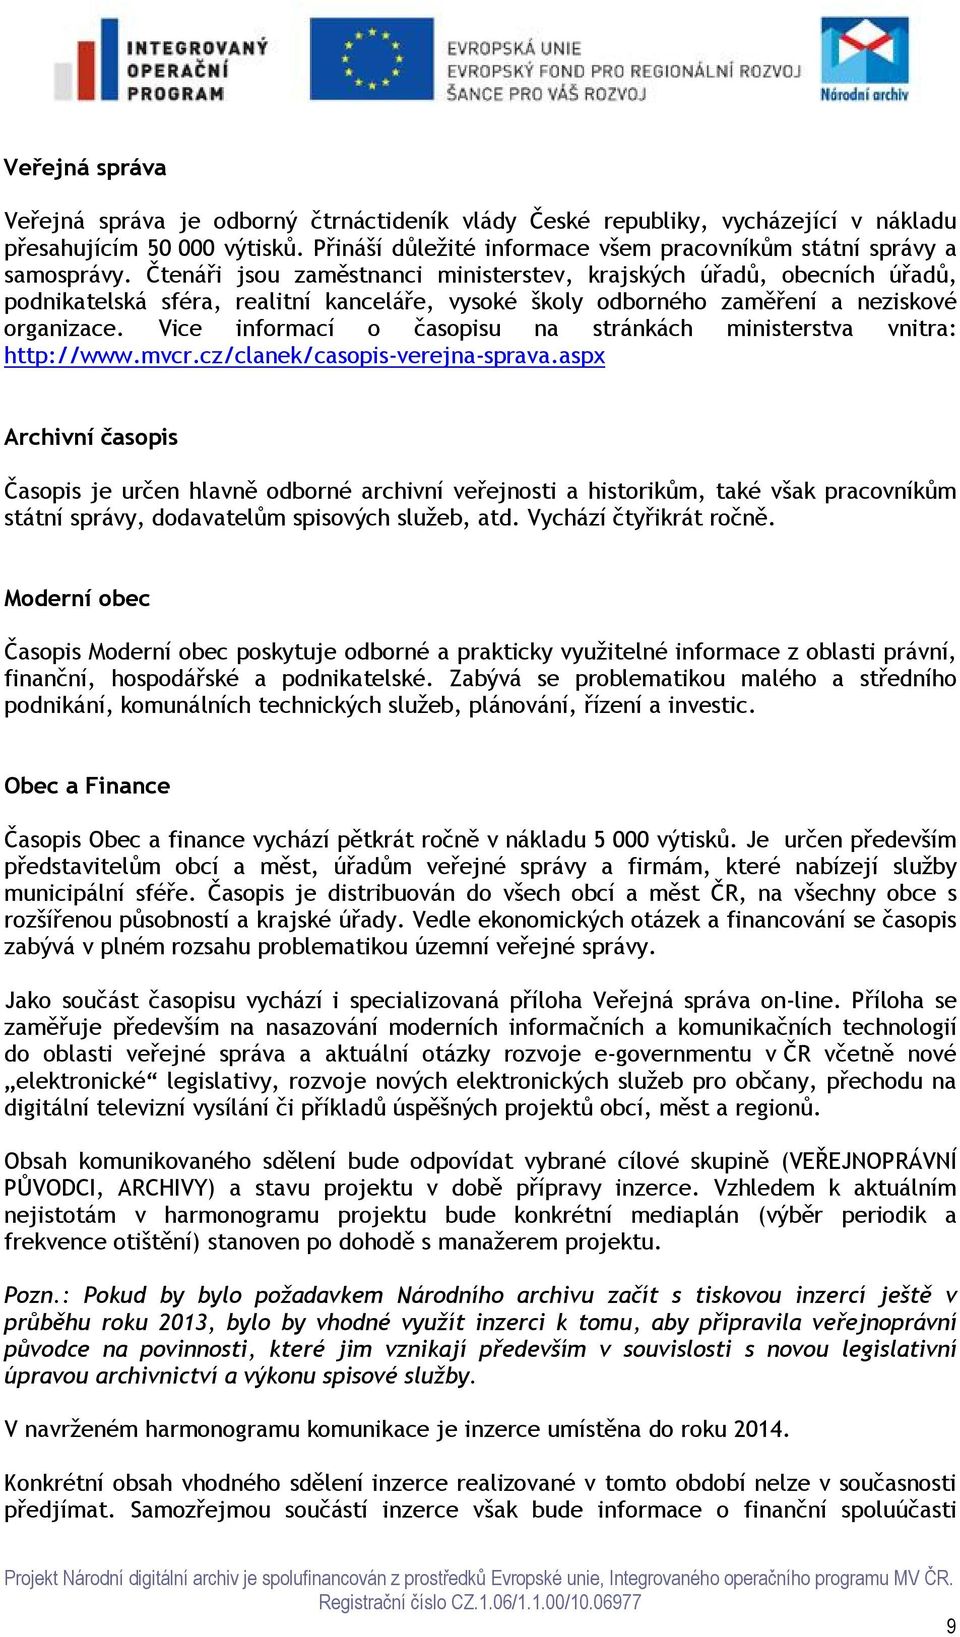 Vice informací o časopisu na stránkách ministerstva vnitra: http://www.mvcr.cz/clanek/casopis-verejna-sprava.